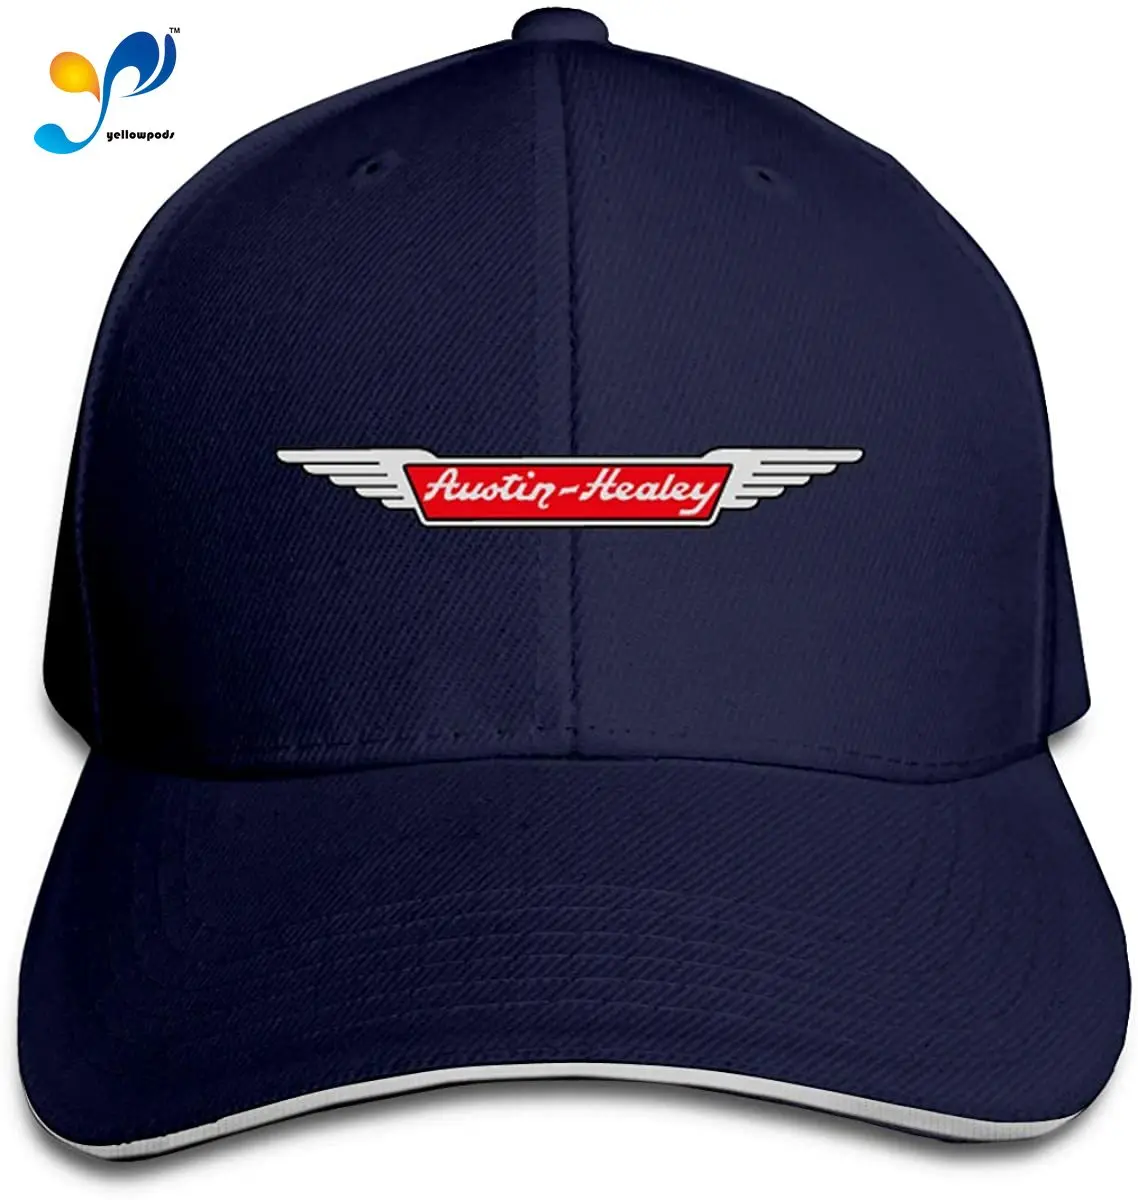 

Au-Stin He-Aley Sandwich Baseball Cap For Men's/Women's Adjustable Trucker Hat Breathable Dad Hat